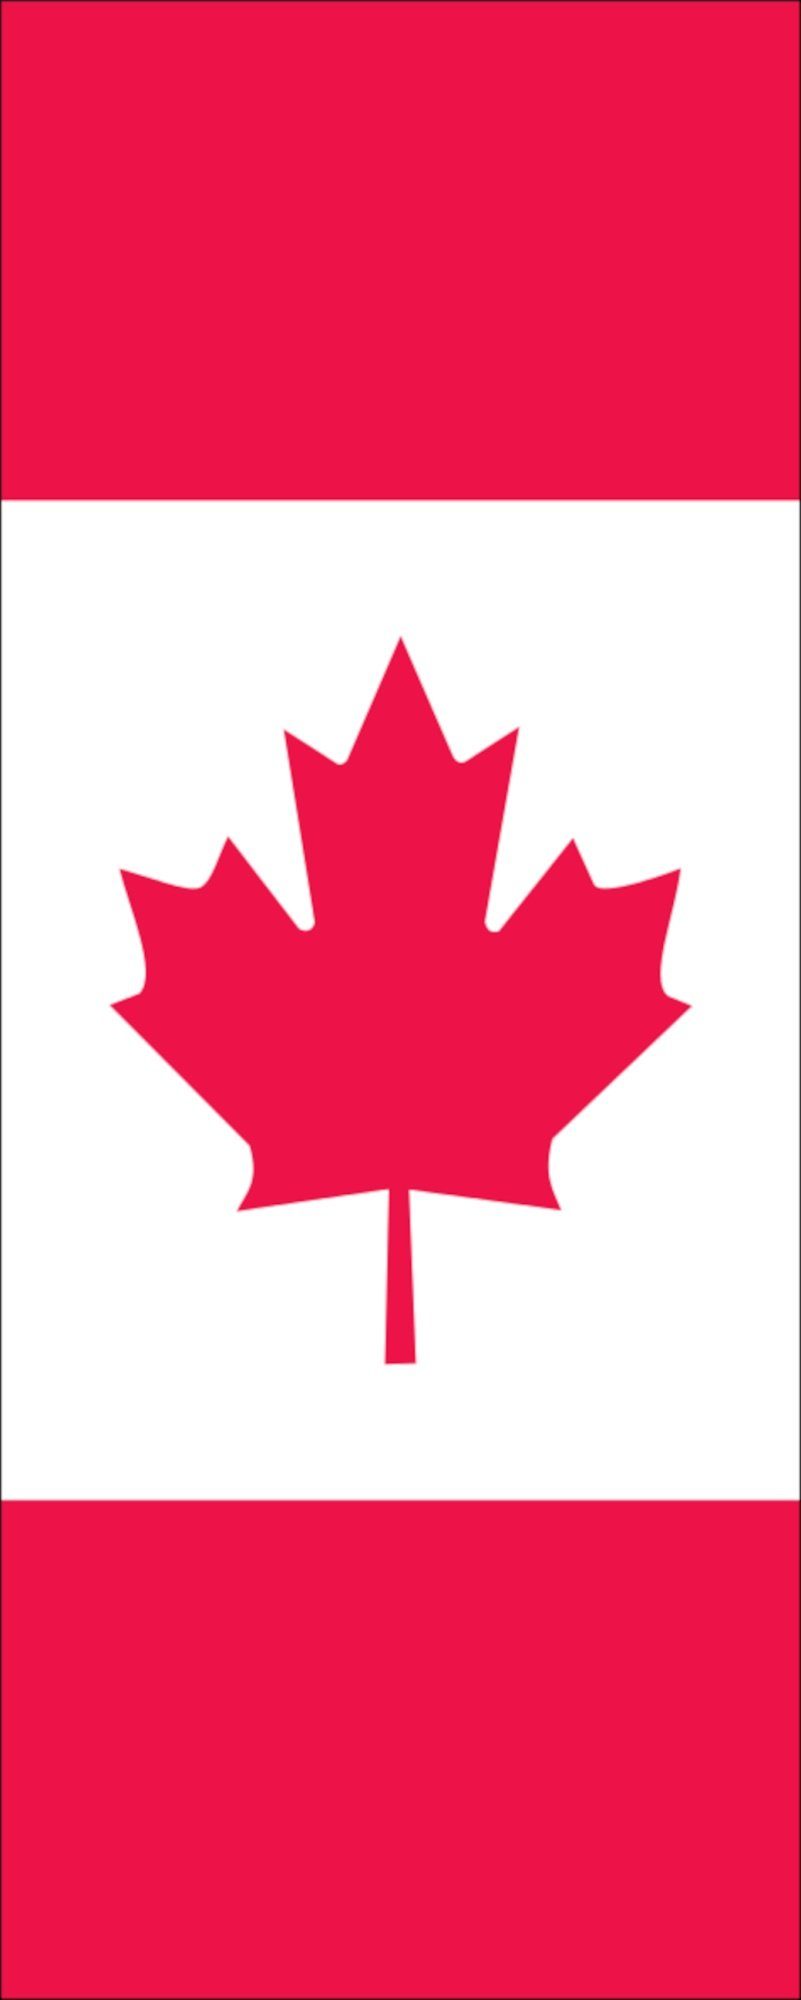 160 flaggenmeer g/m² Hochformat Flagge Kanada